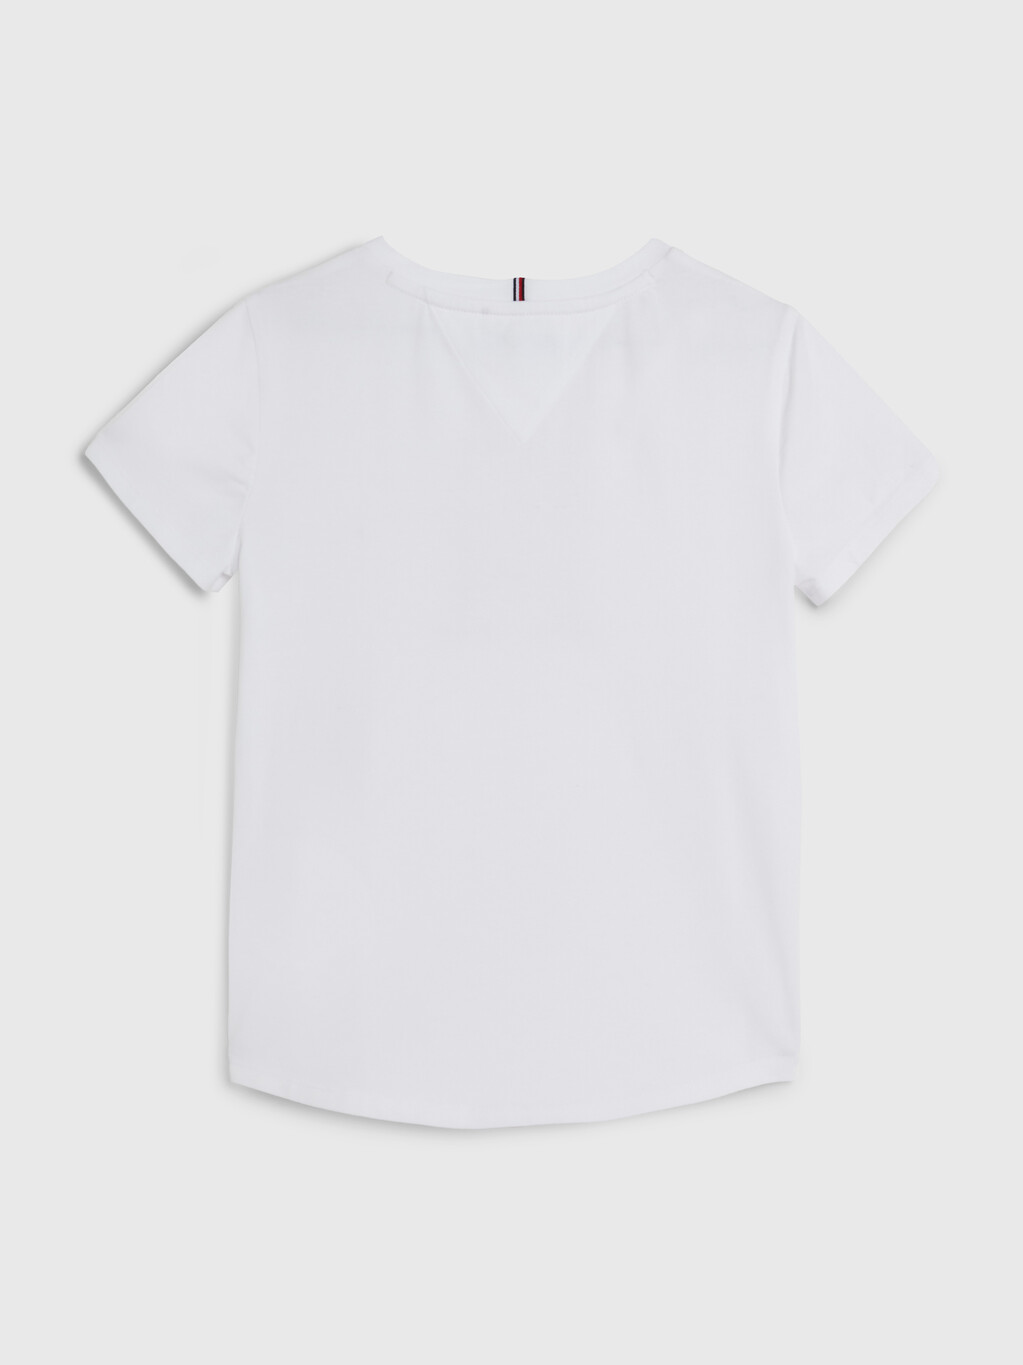 Crew Neck Monogram T-Shirt, White, hi-res